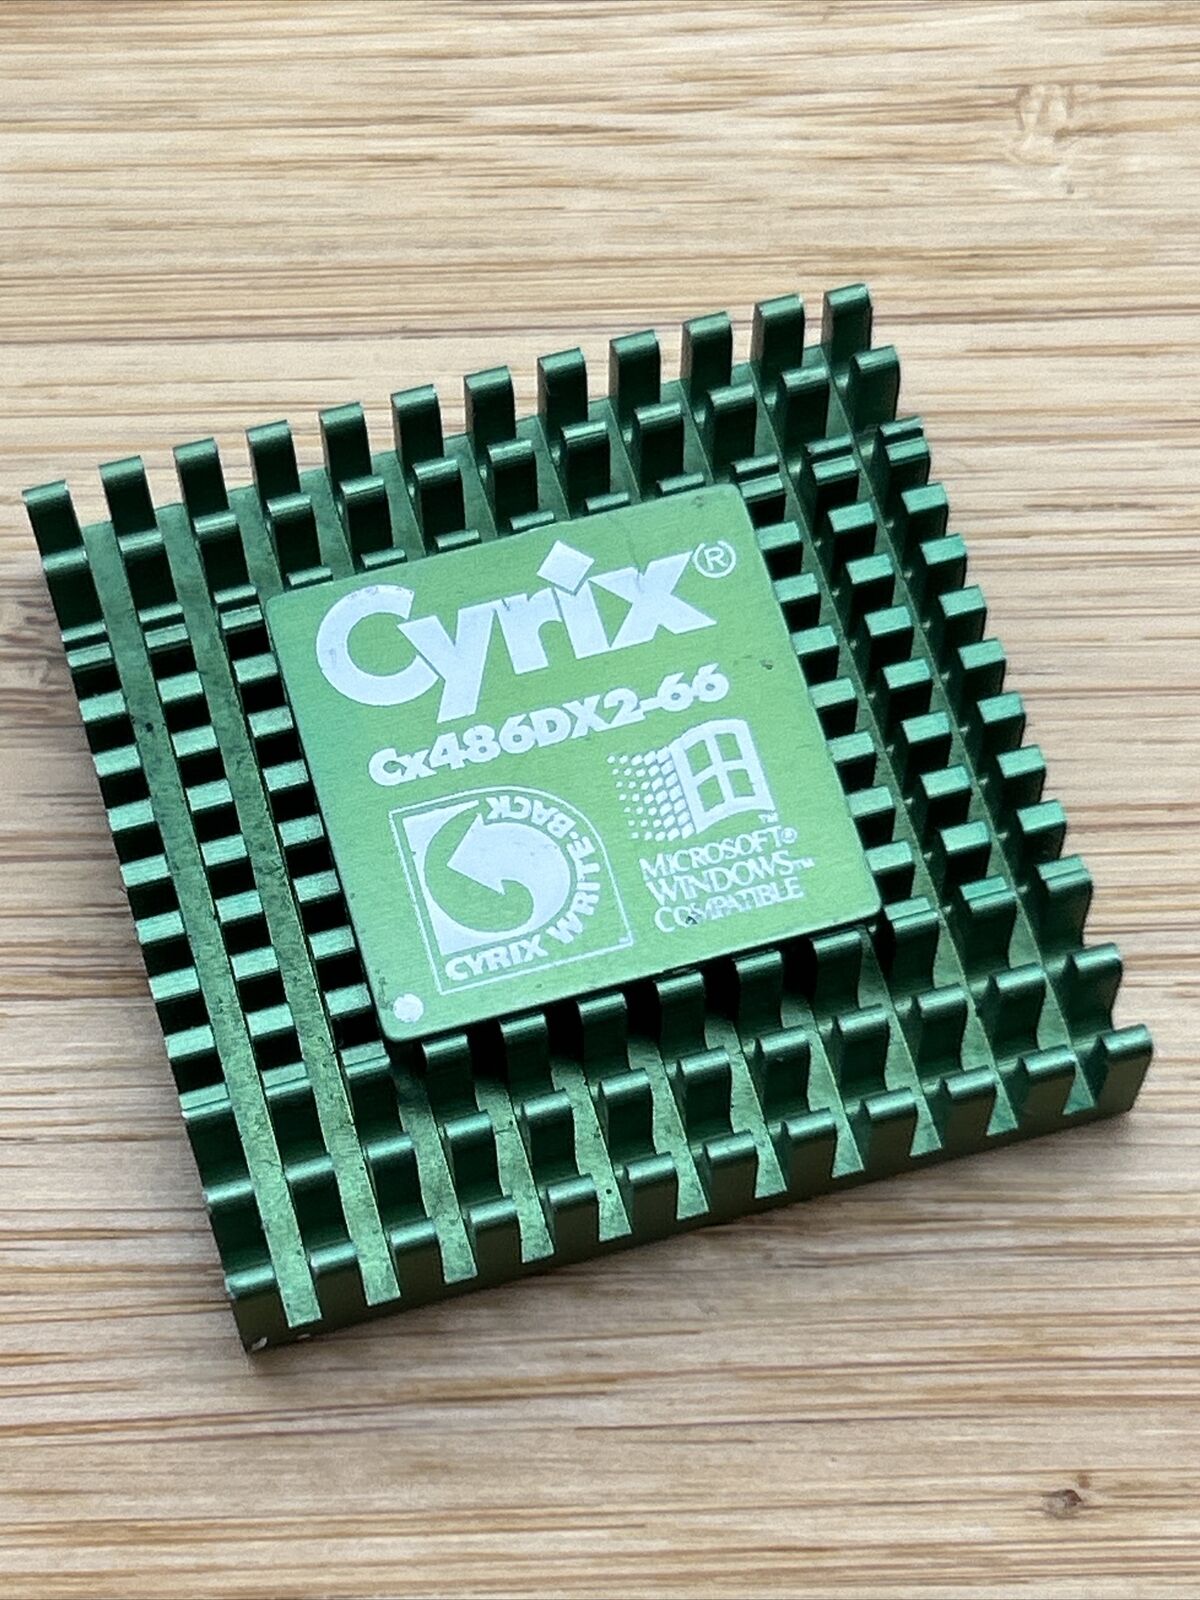 Cyrix Cx486 DX2 66-MHz GREEN HEATSINK ONLY for CPU Processor 1993 Rare Vintage